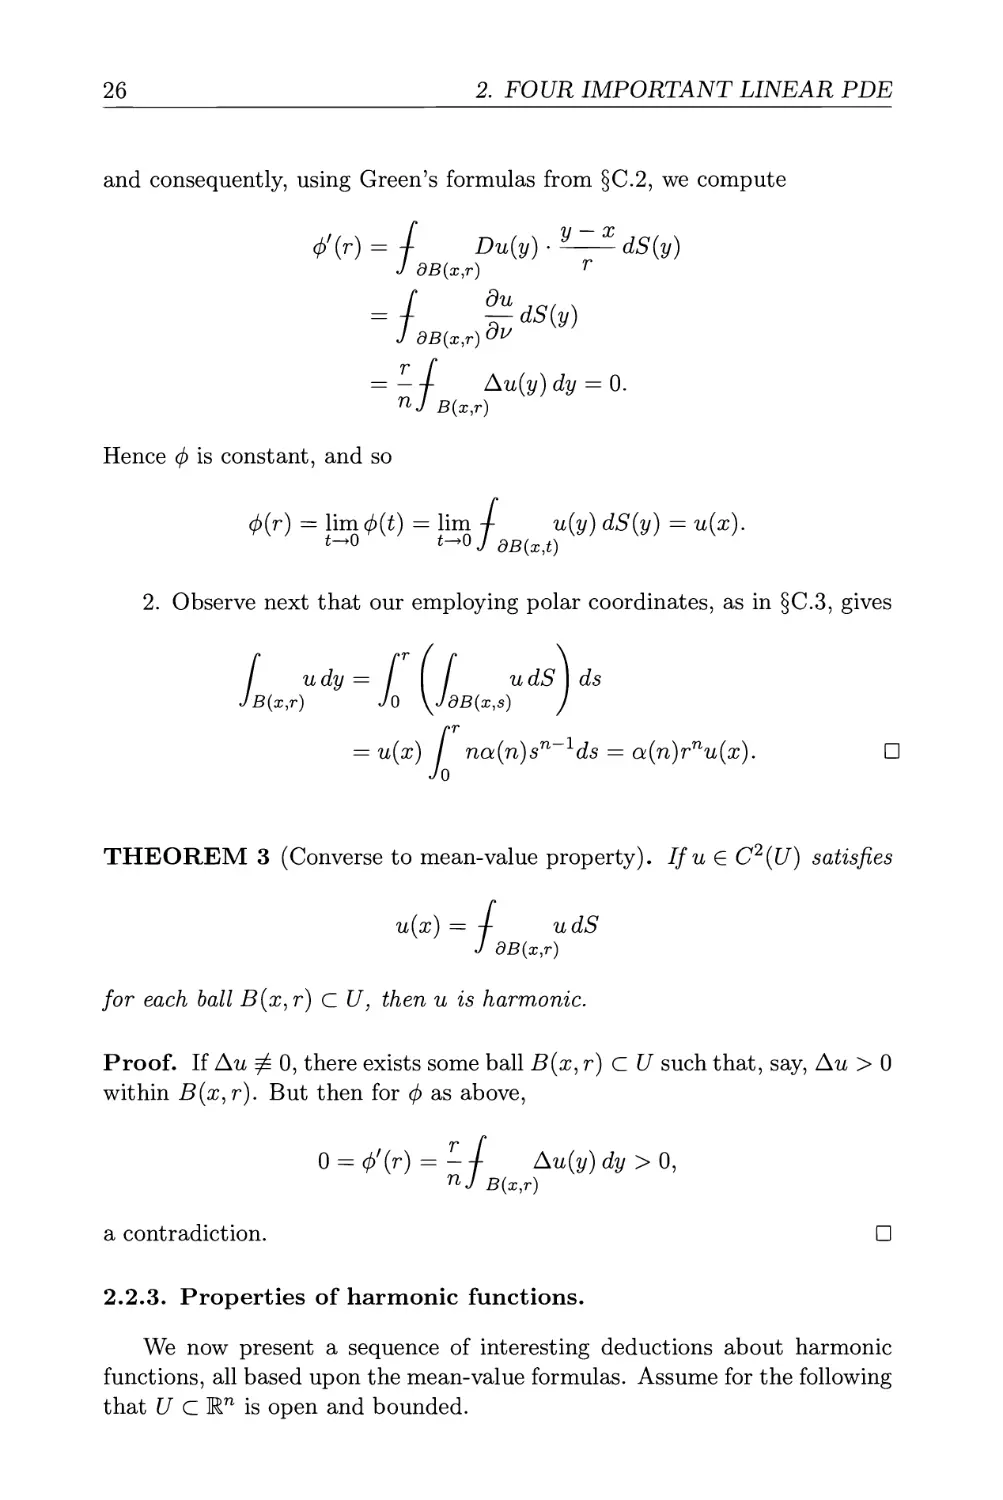 2.2.3. Properties of harmonic functions